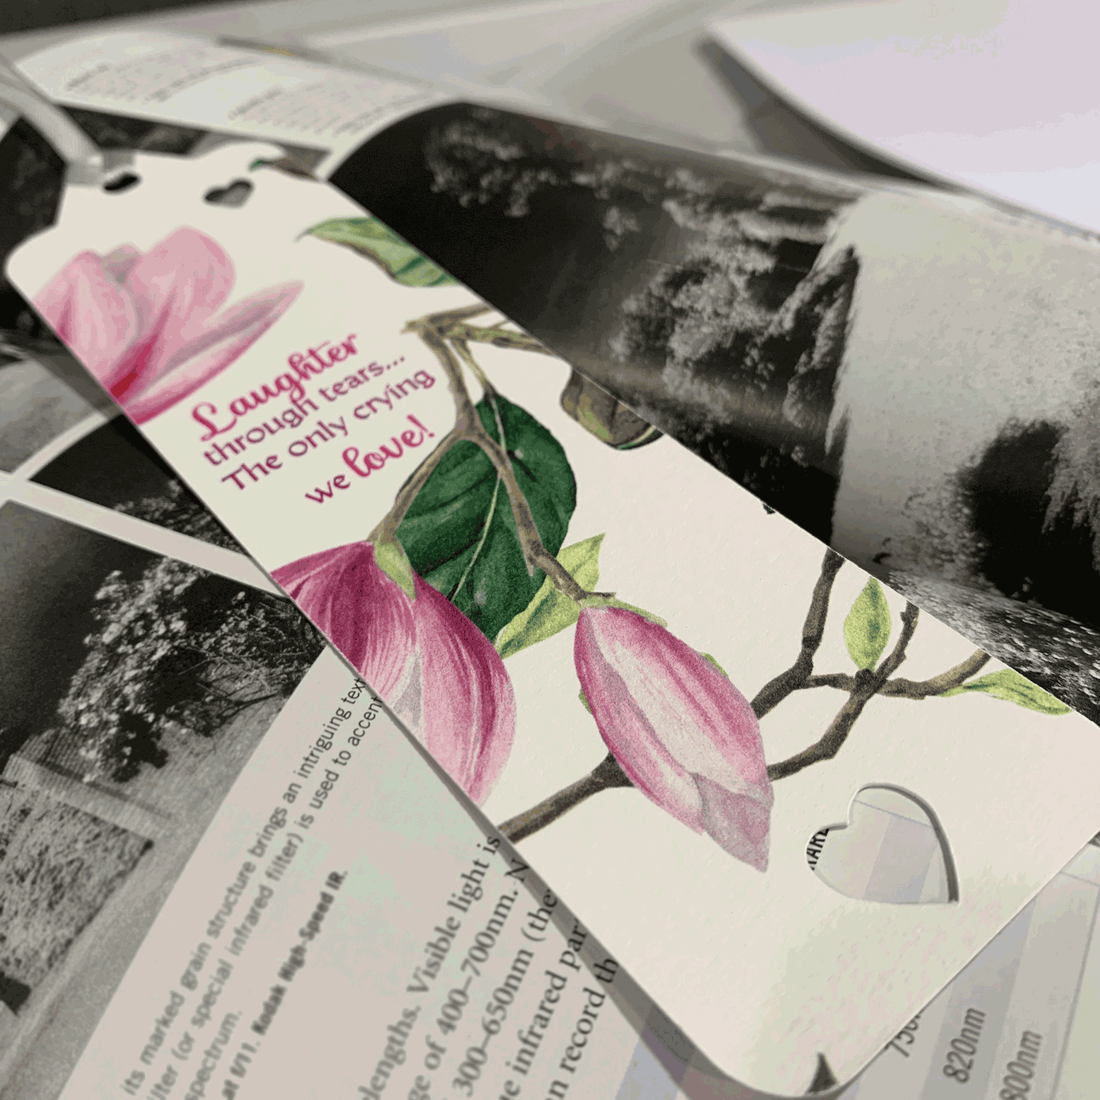 Magnolia bookmark - Large traditional